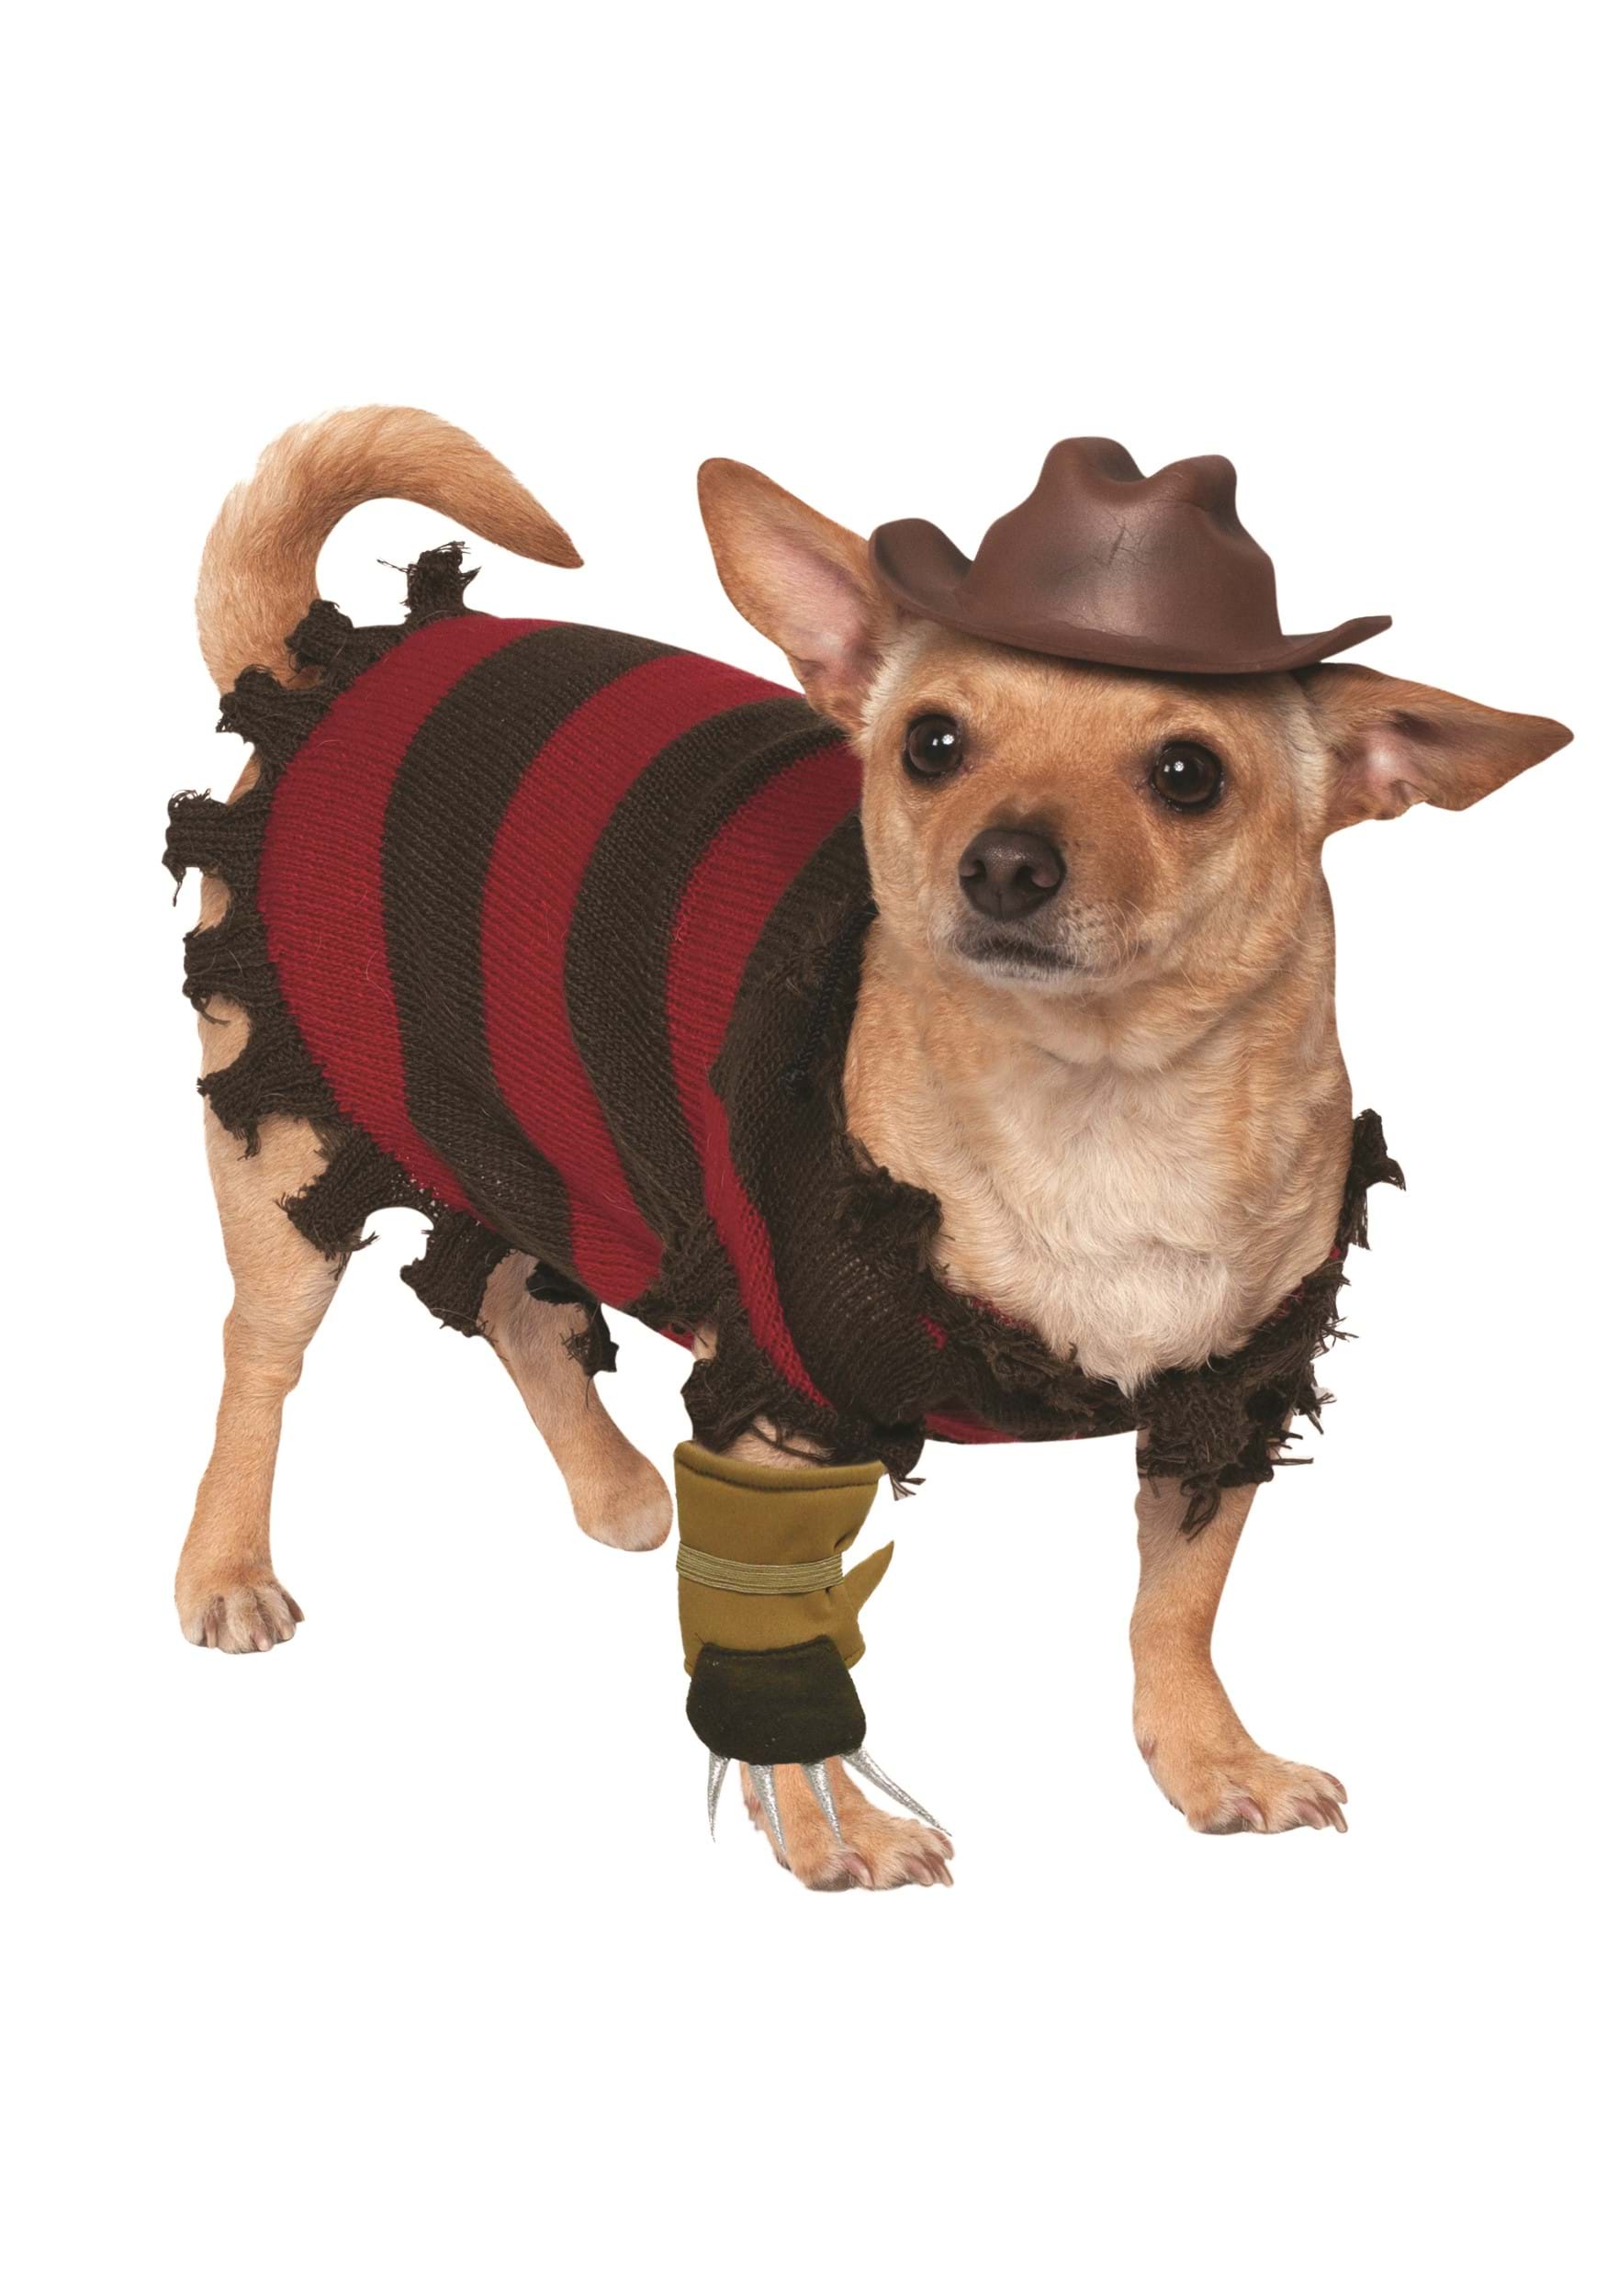 Freddy Krueger Nightmare Pet Costume